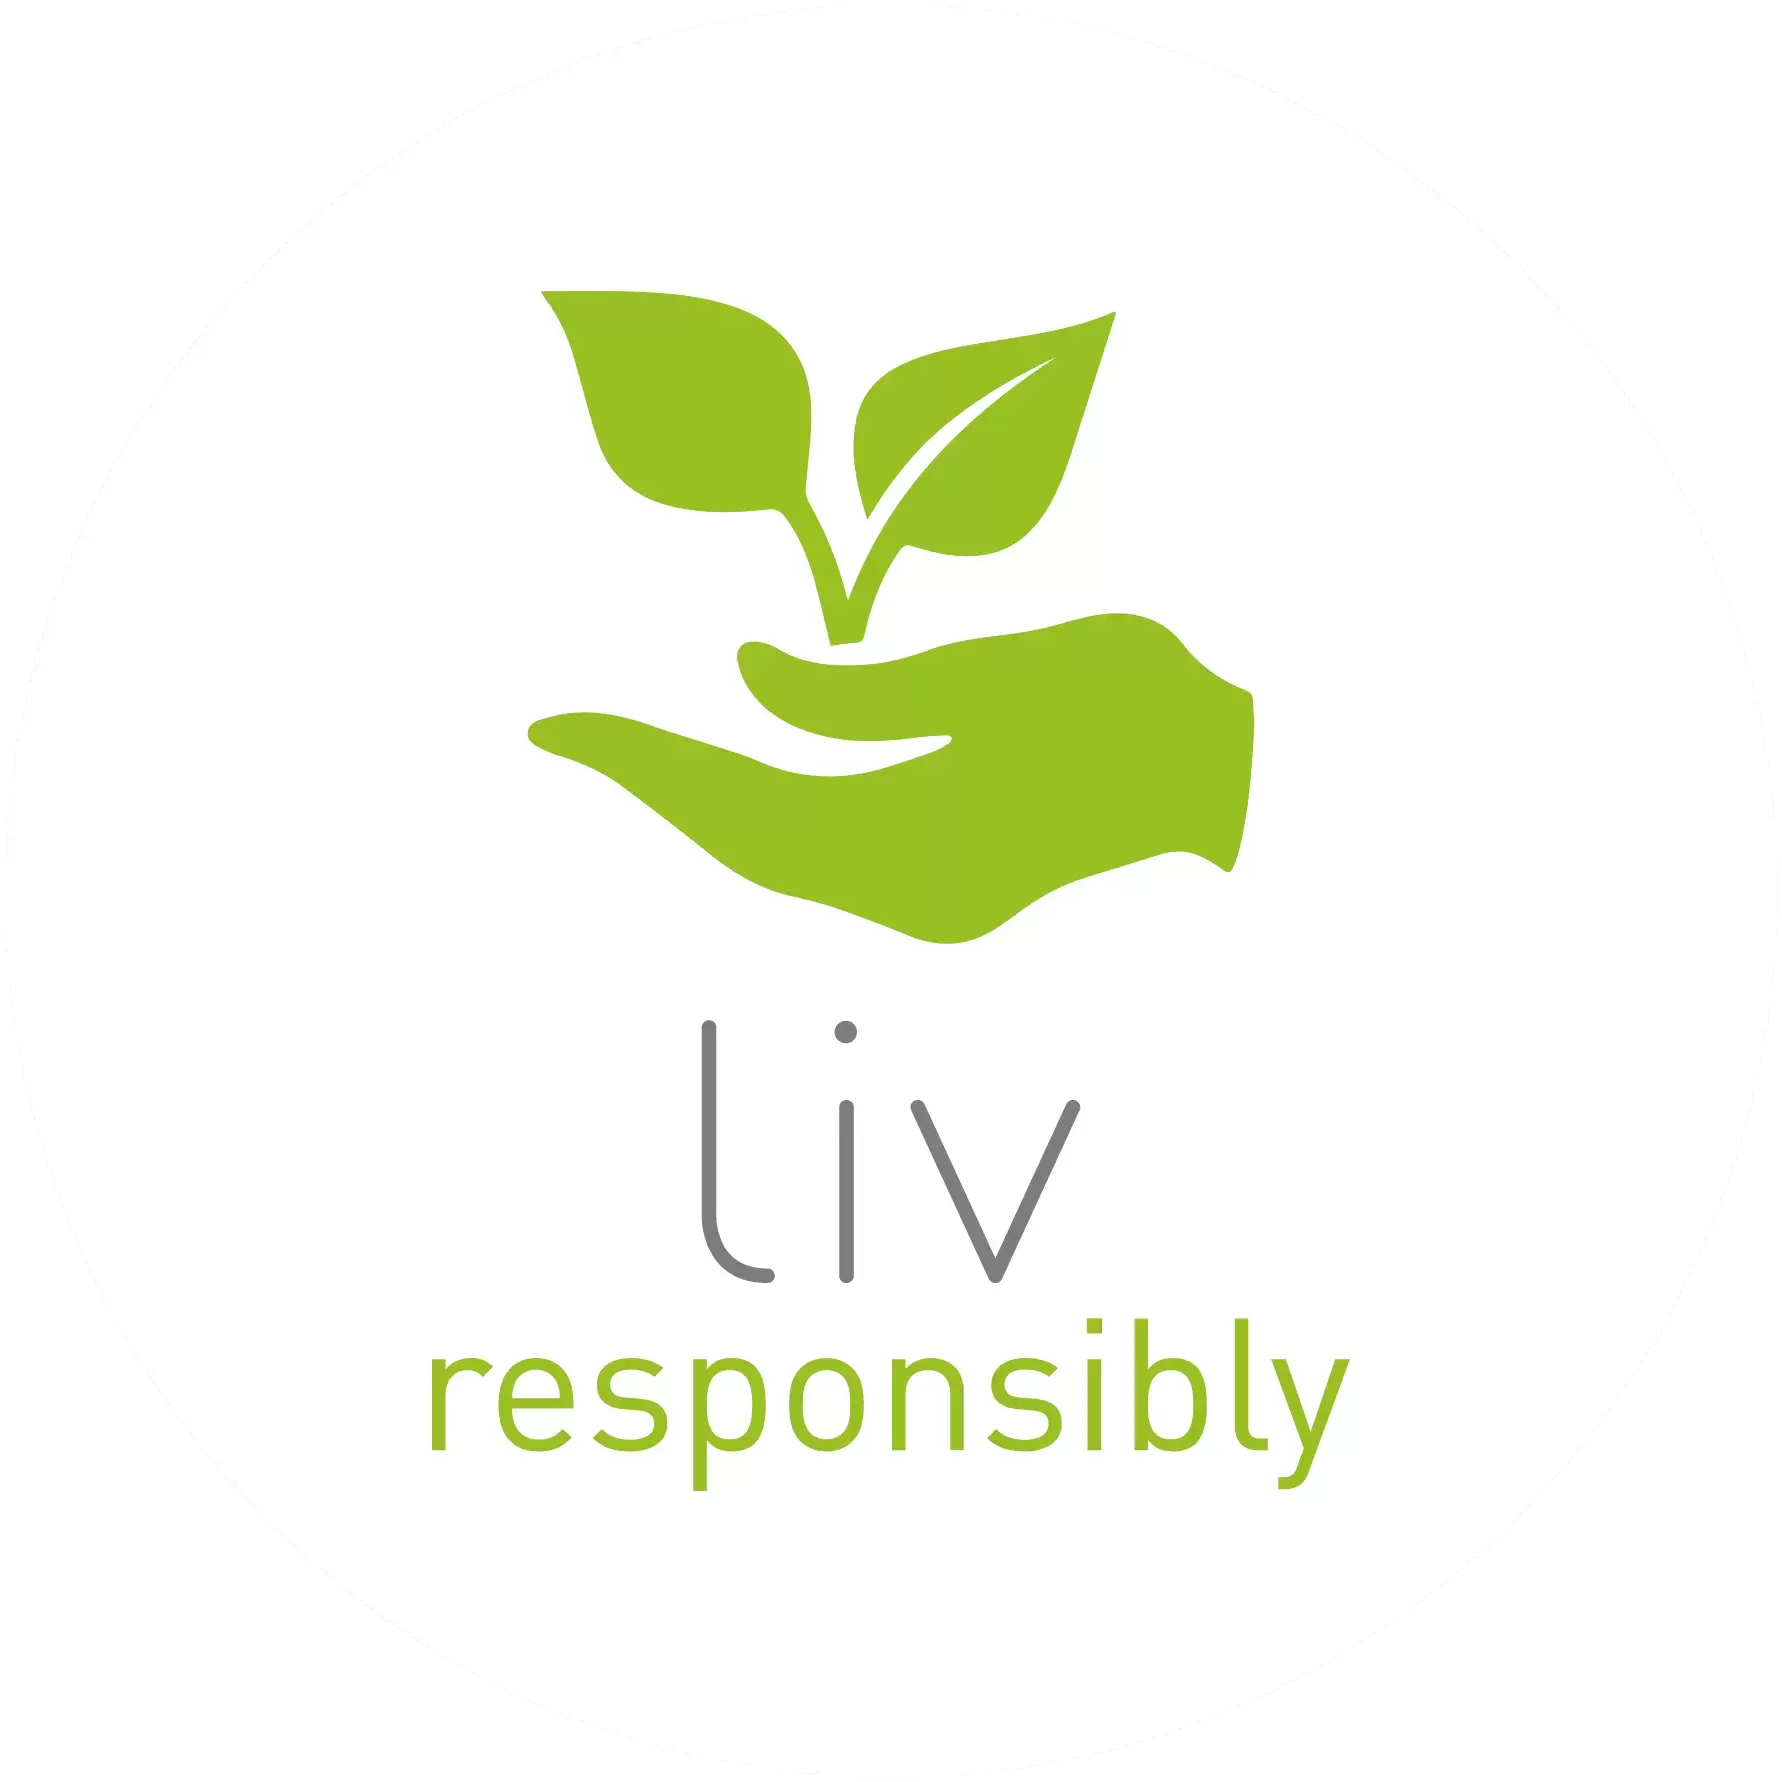 Liv responsibly logo